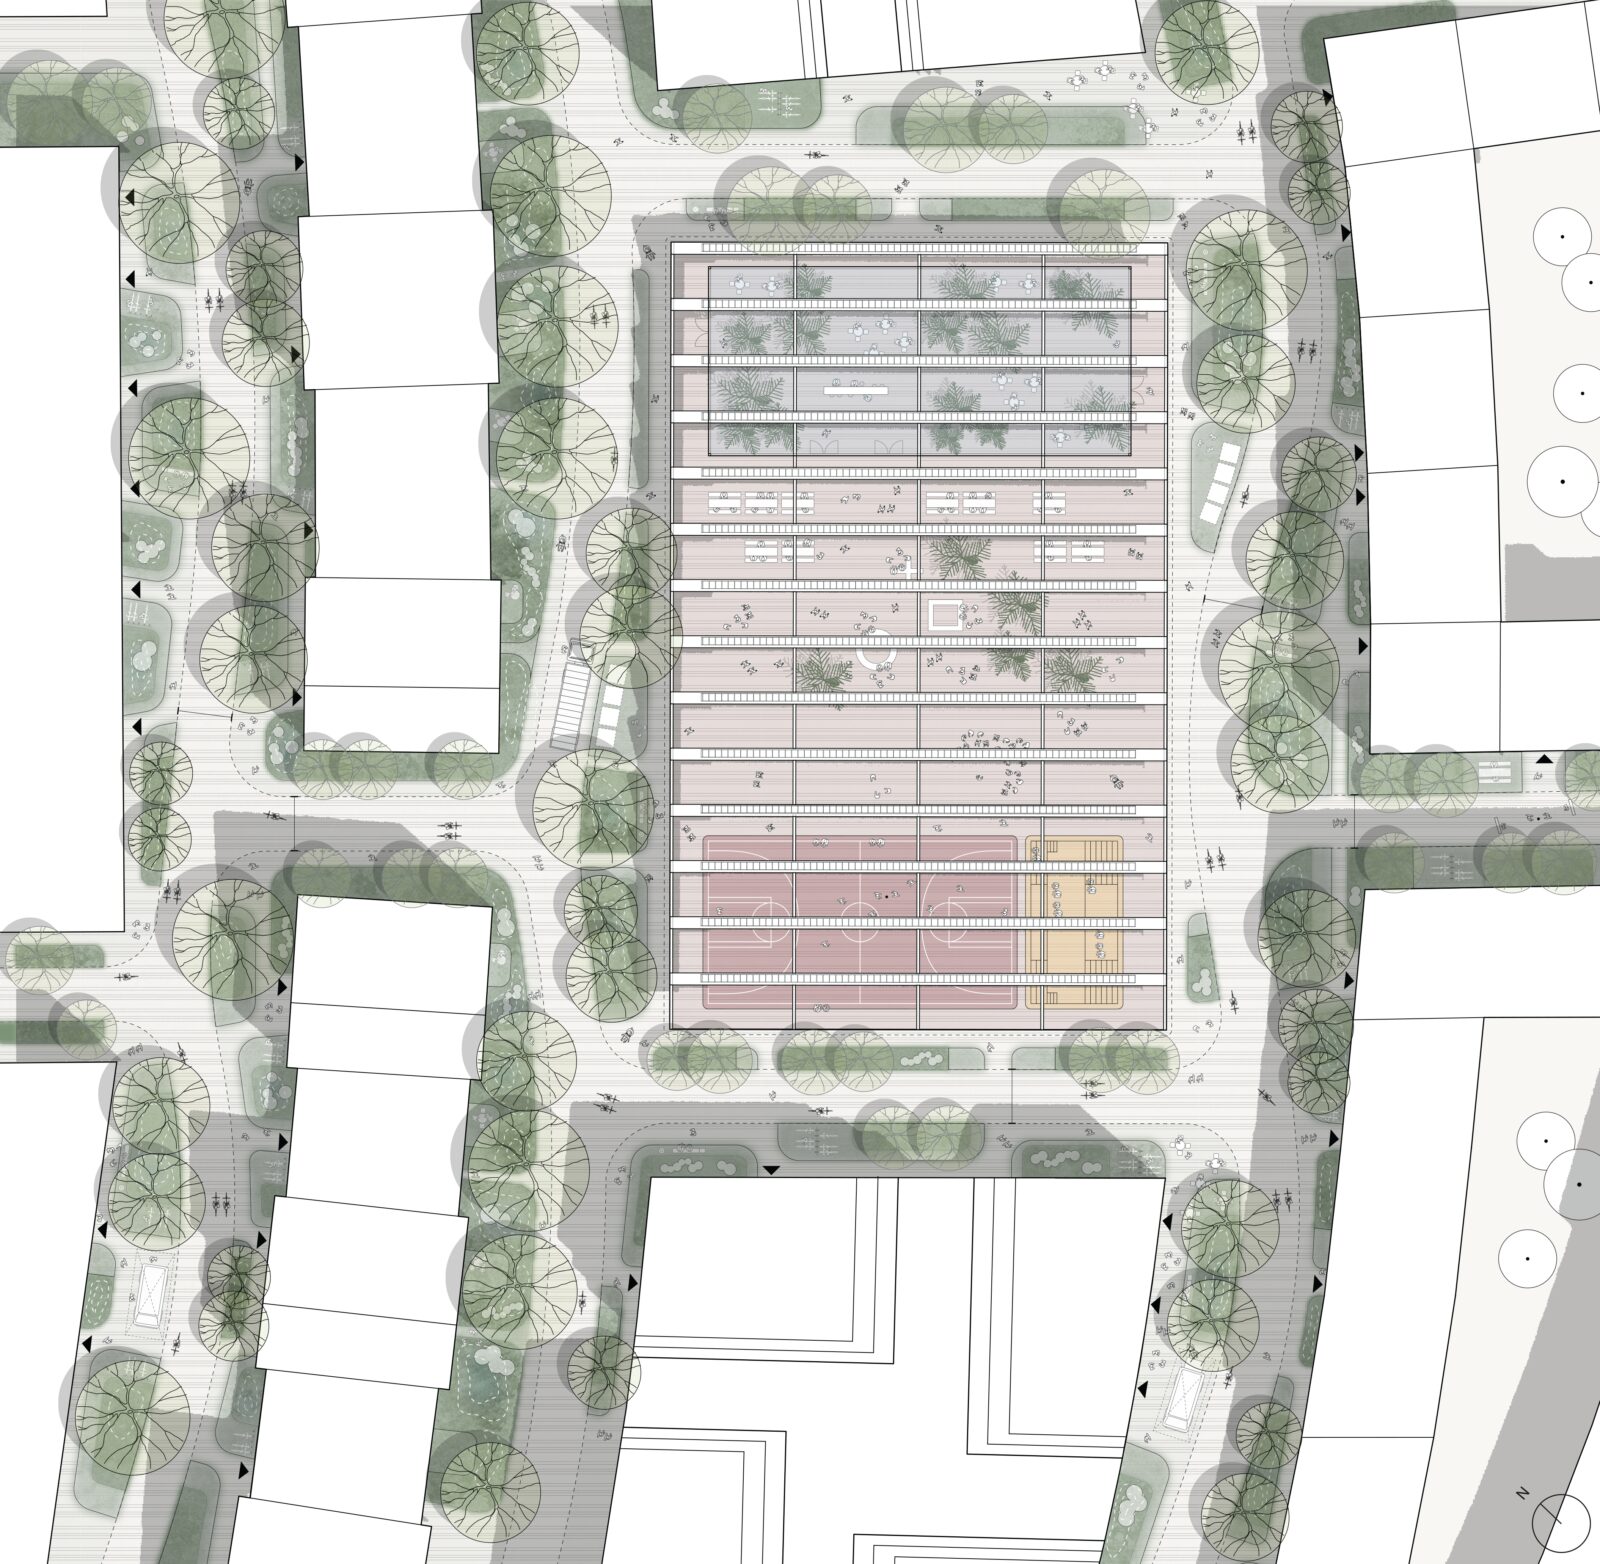 220 cobe jernbanebyen neighbourhood plaza plan